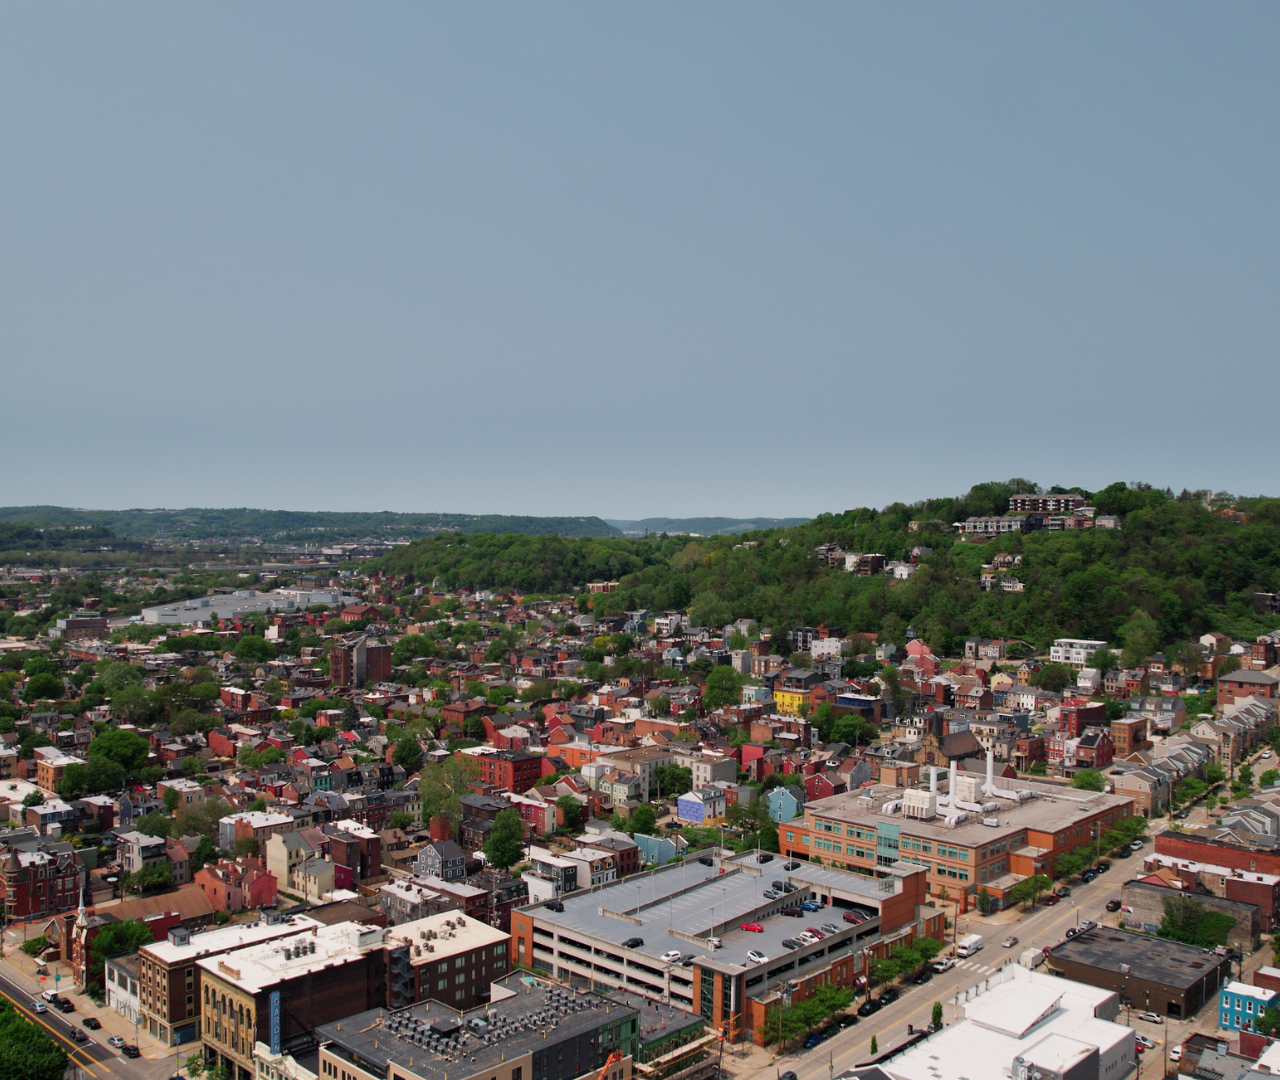 Drone footage of residential neighborhoods in Pittsburgh, PA.